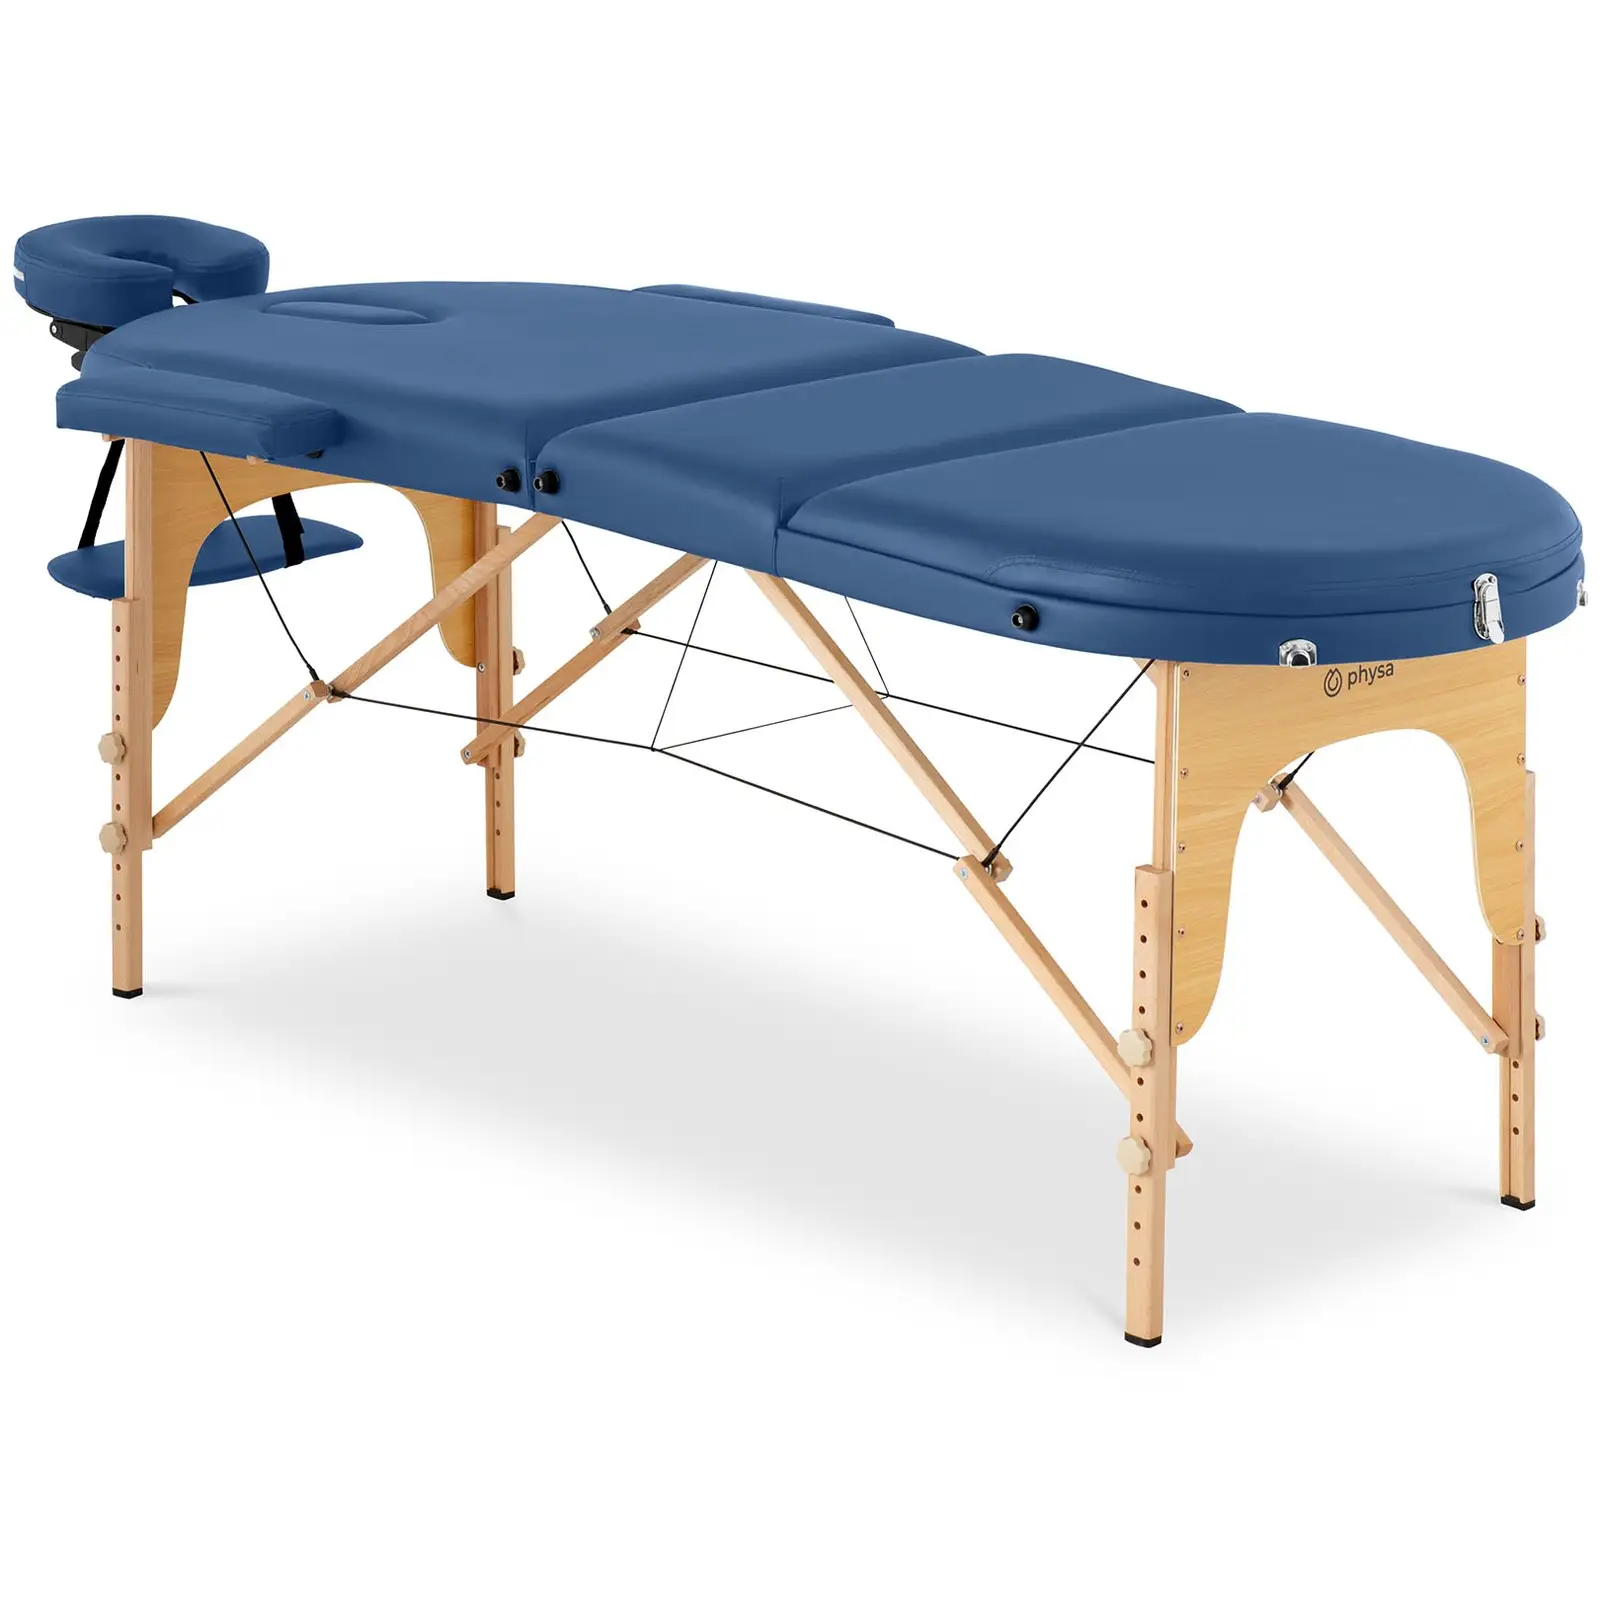 Hopfällbar massagebänk - 185-211 x 70-88 x 63-85 cm - 227 kg - Blå